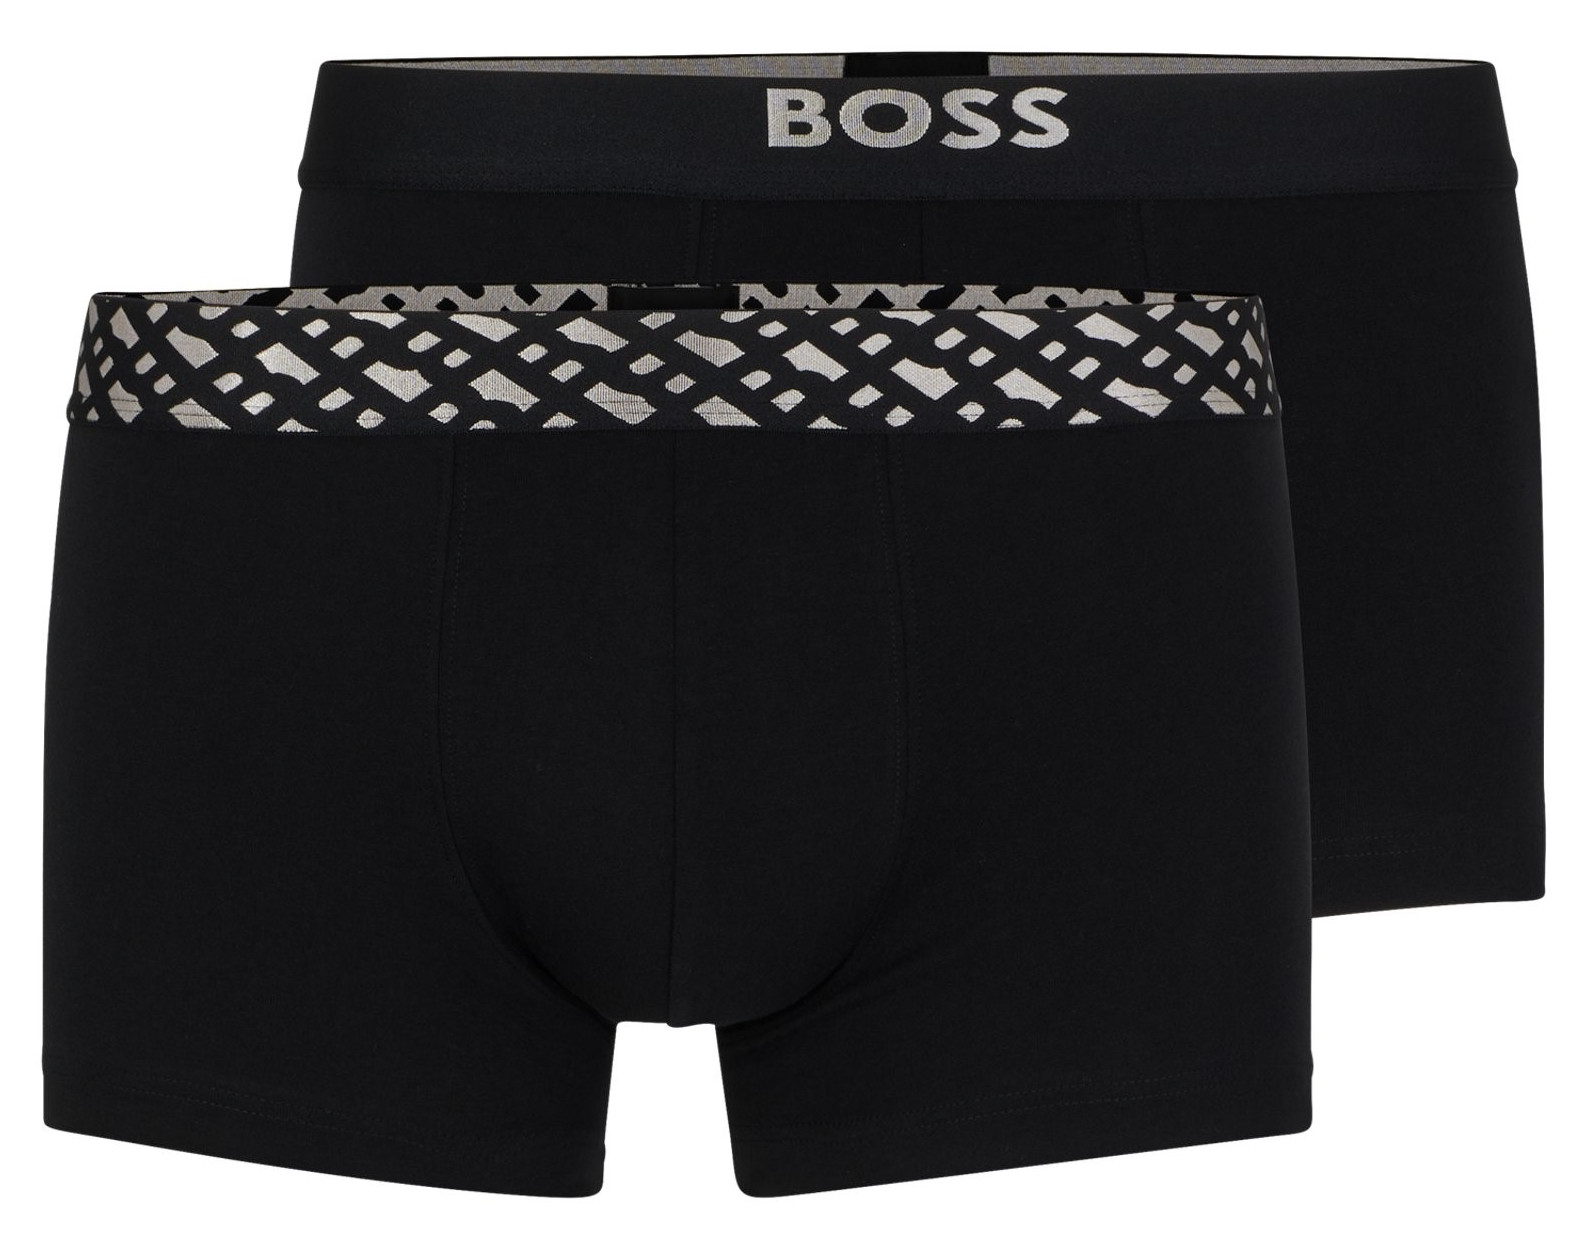 Hugo Boss 2 PACK - pánské boxerky BOSS 50499823-001 XXL